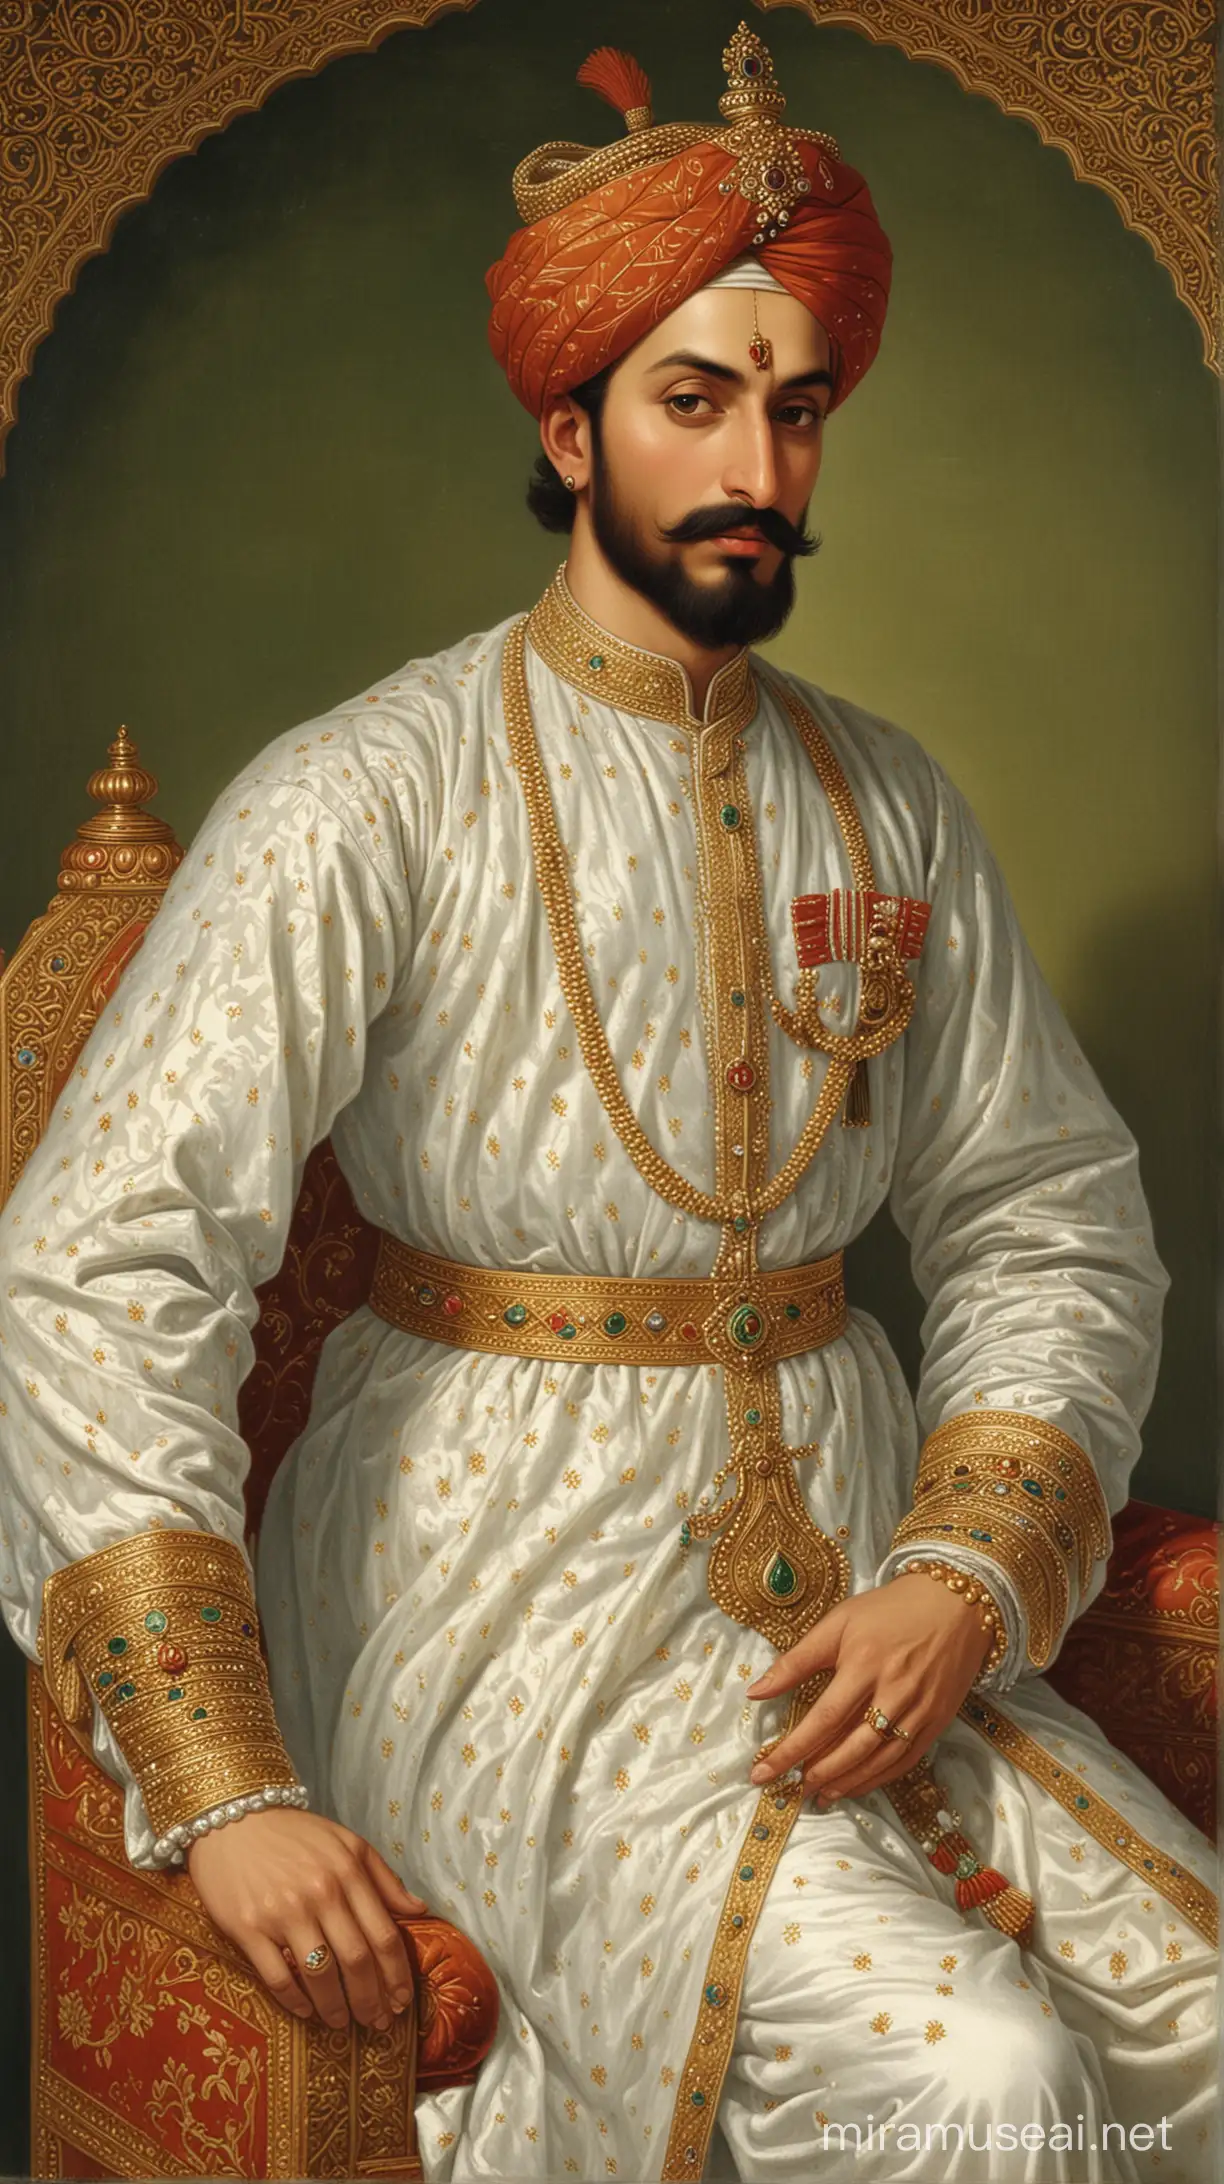 Mughal Emperor Shah Jahan in Regal Attire with Peacock Throne